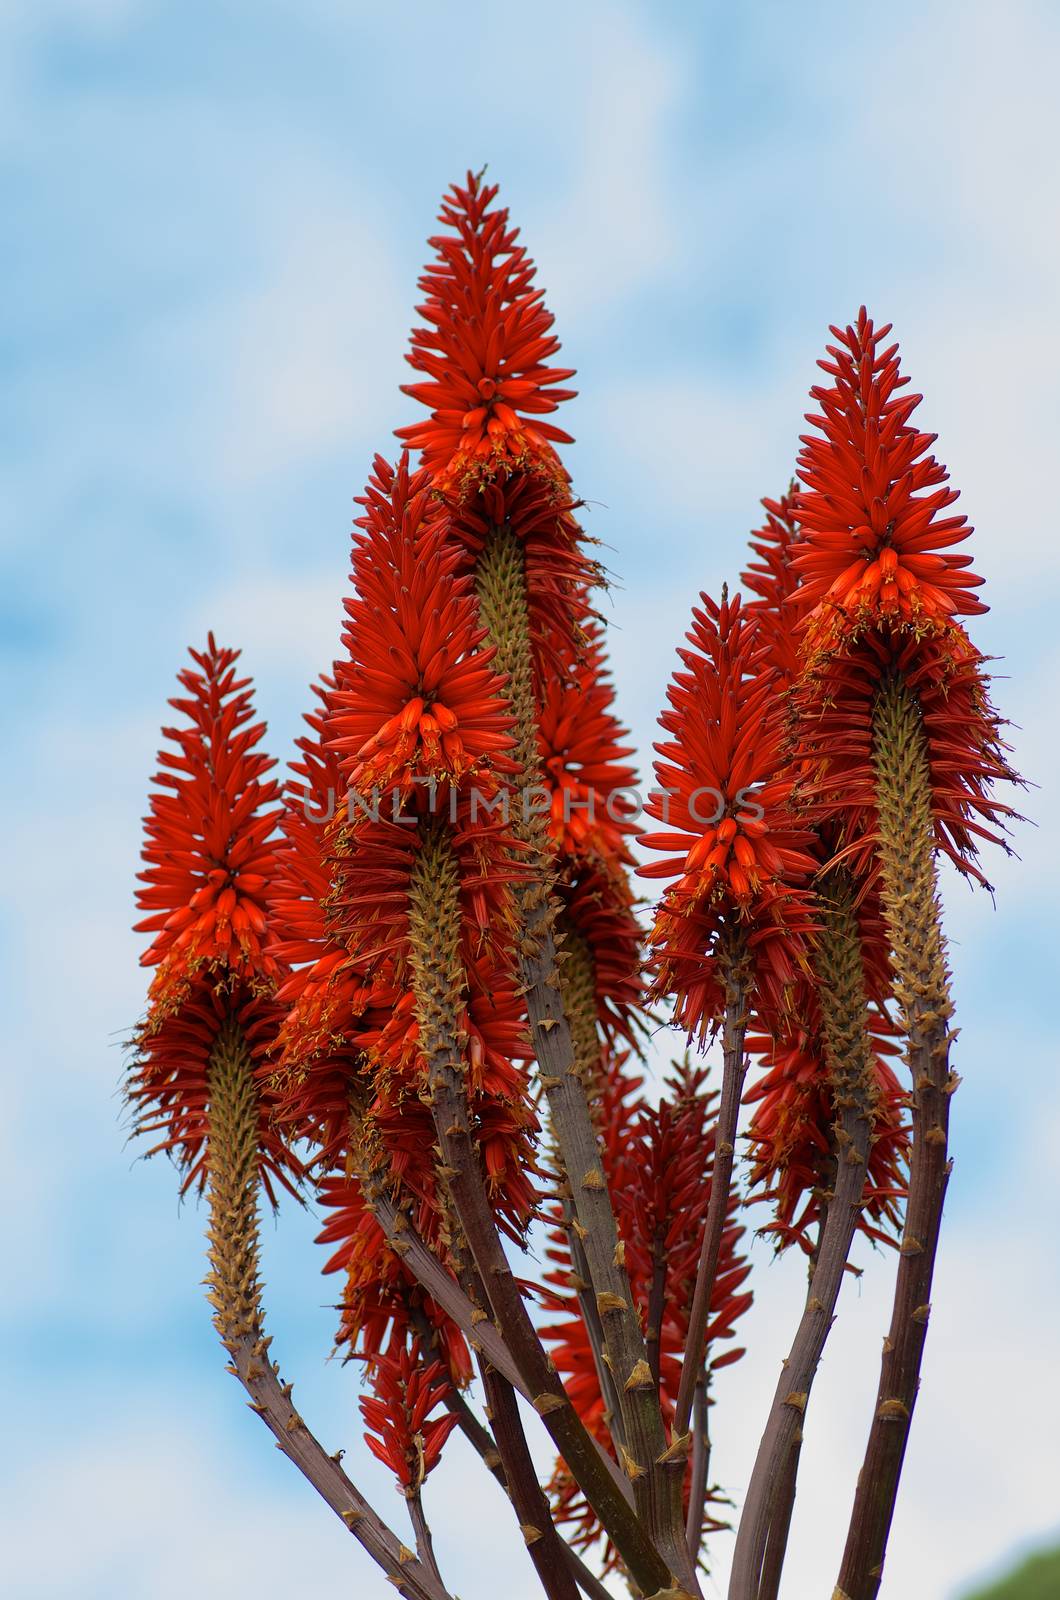 Blooming Aloe Vera by zhekos